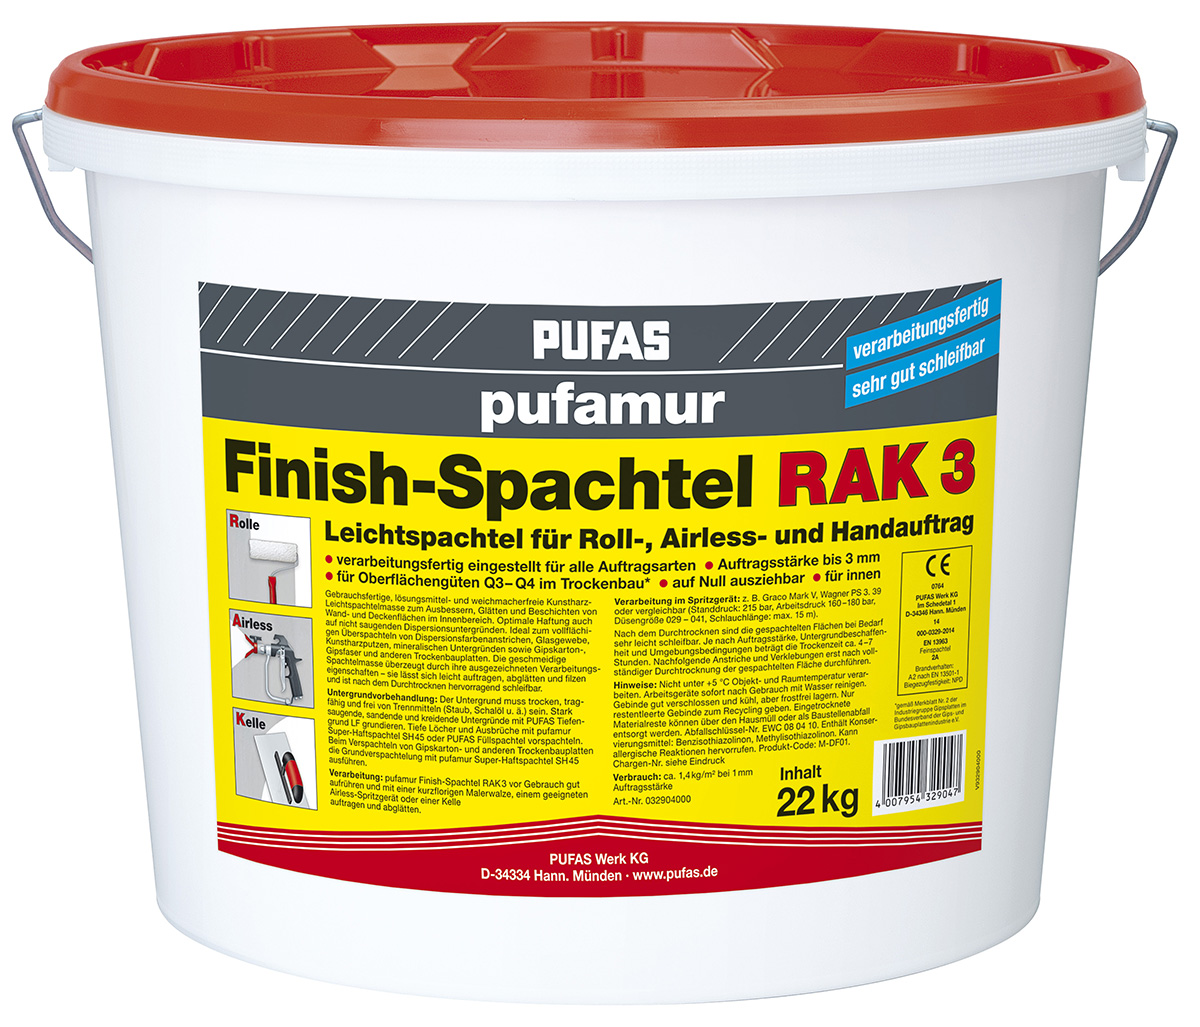 PUFAS pufamur Finish-Spachtel RAK3